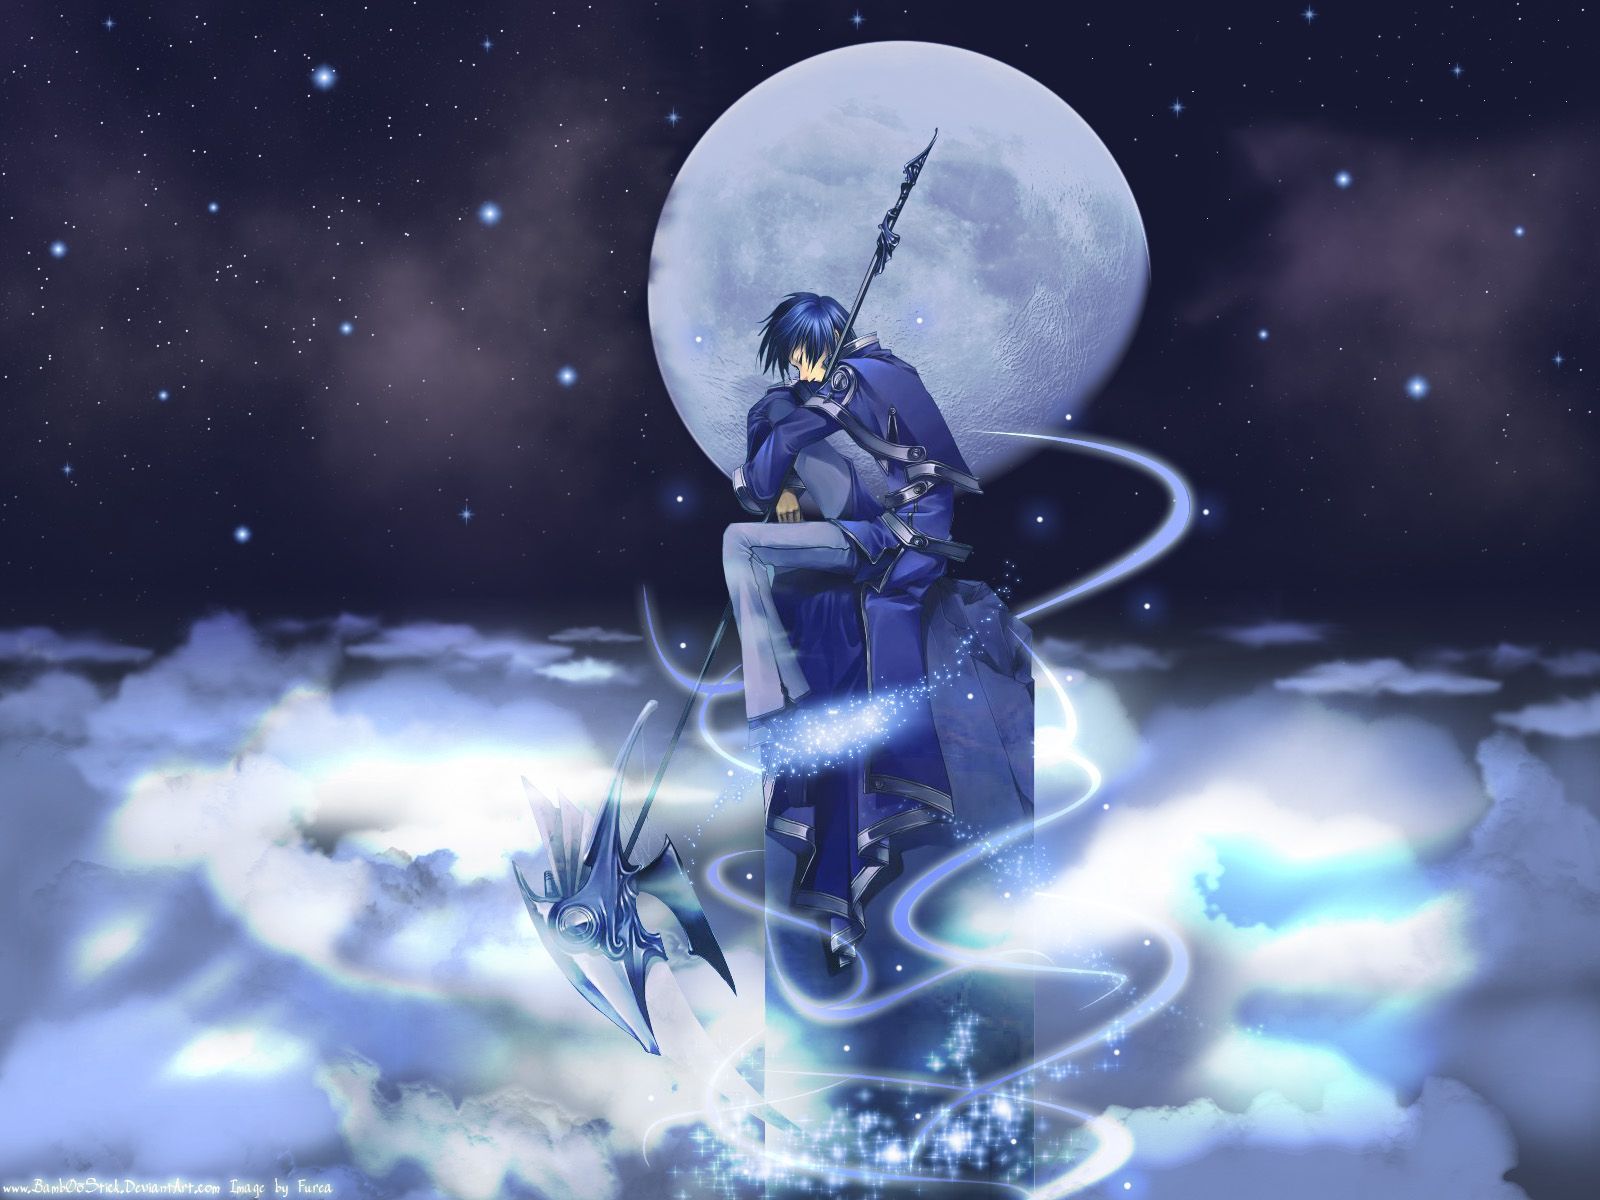 Anime Moon Wallpaper Free Anime Moon Background